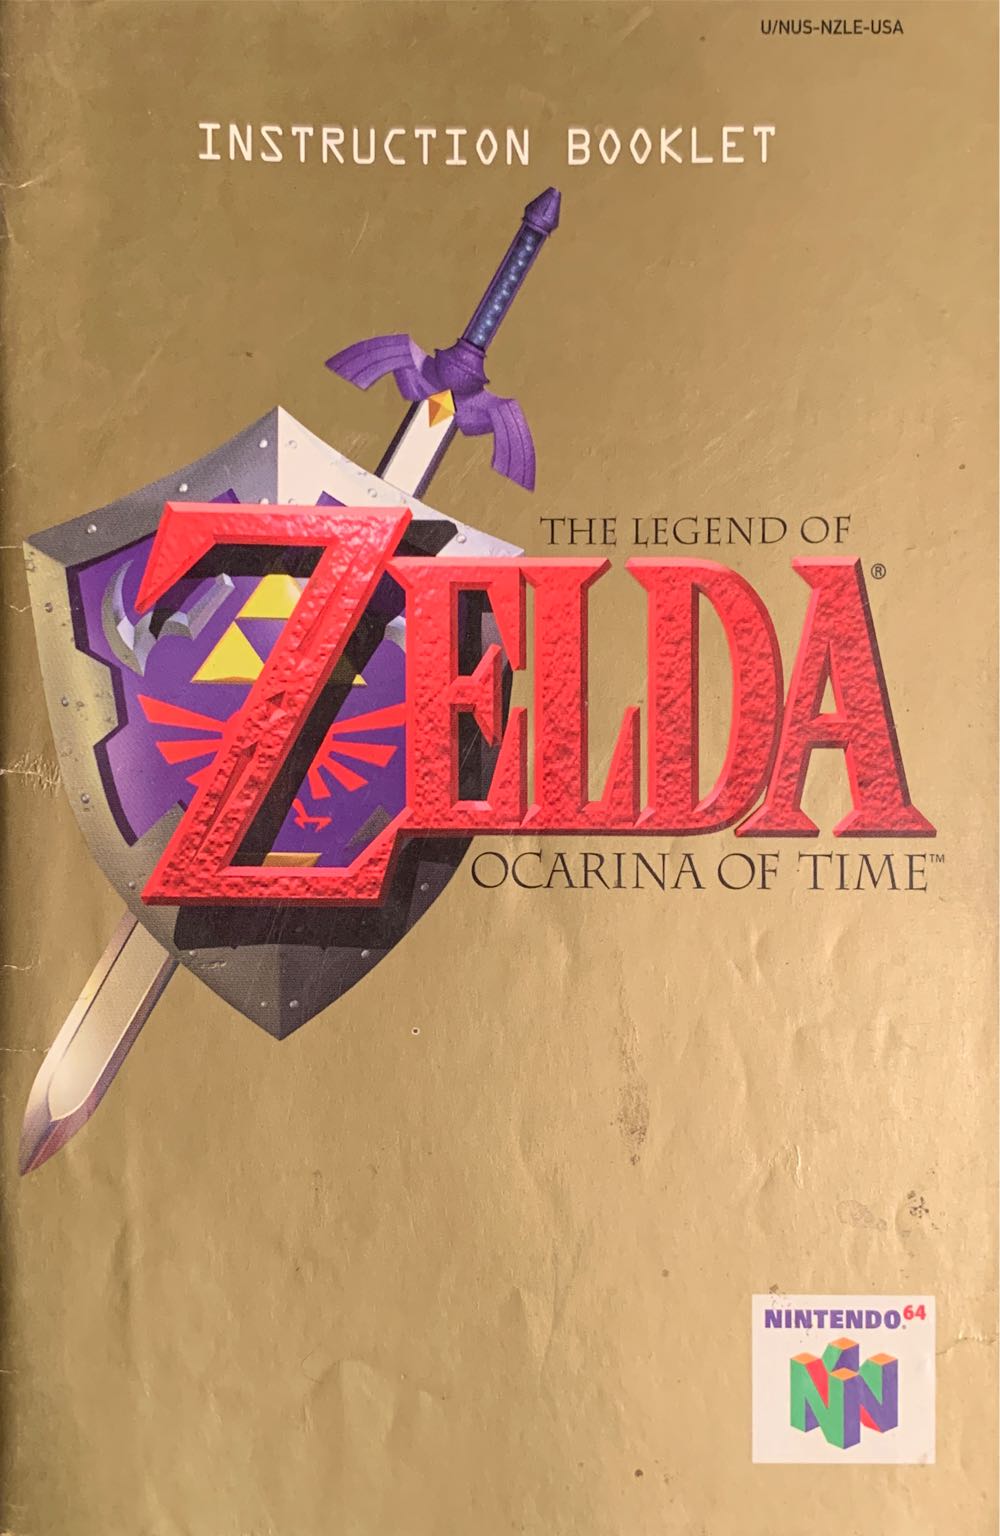 LOZ: Ocarina of Time - Nintendo Wii U Virtual Console (Nintendo) video game collectible - Main Image 2